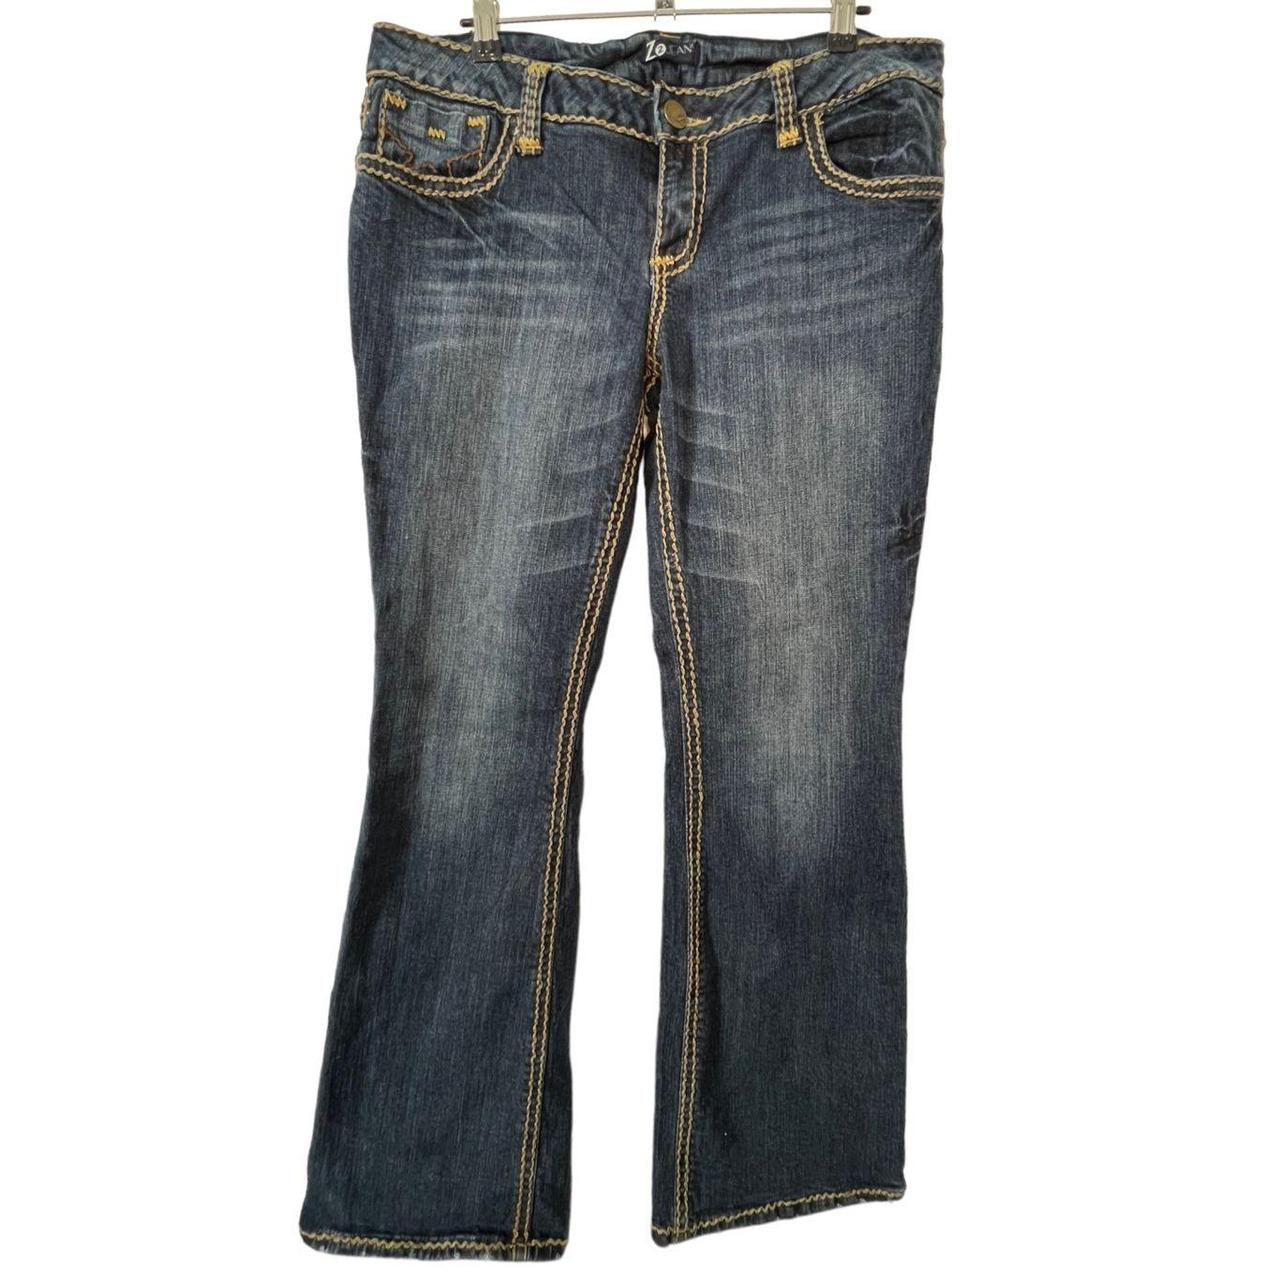 Lane Bryant Sequin Embroidered Pocket Jeans Faded - Depop